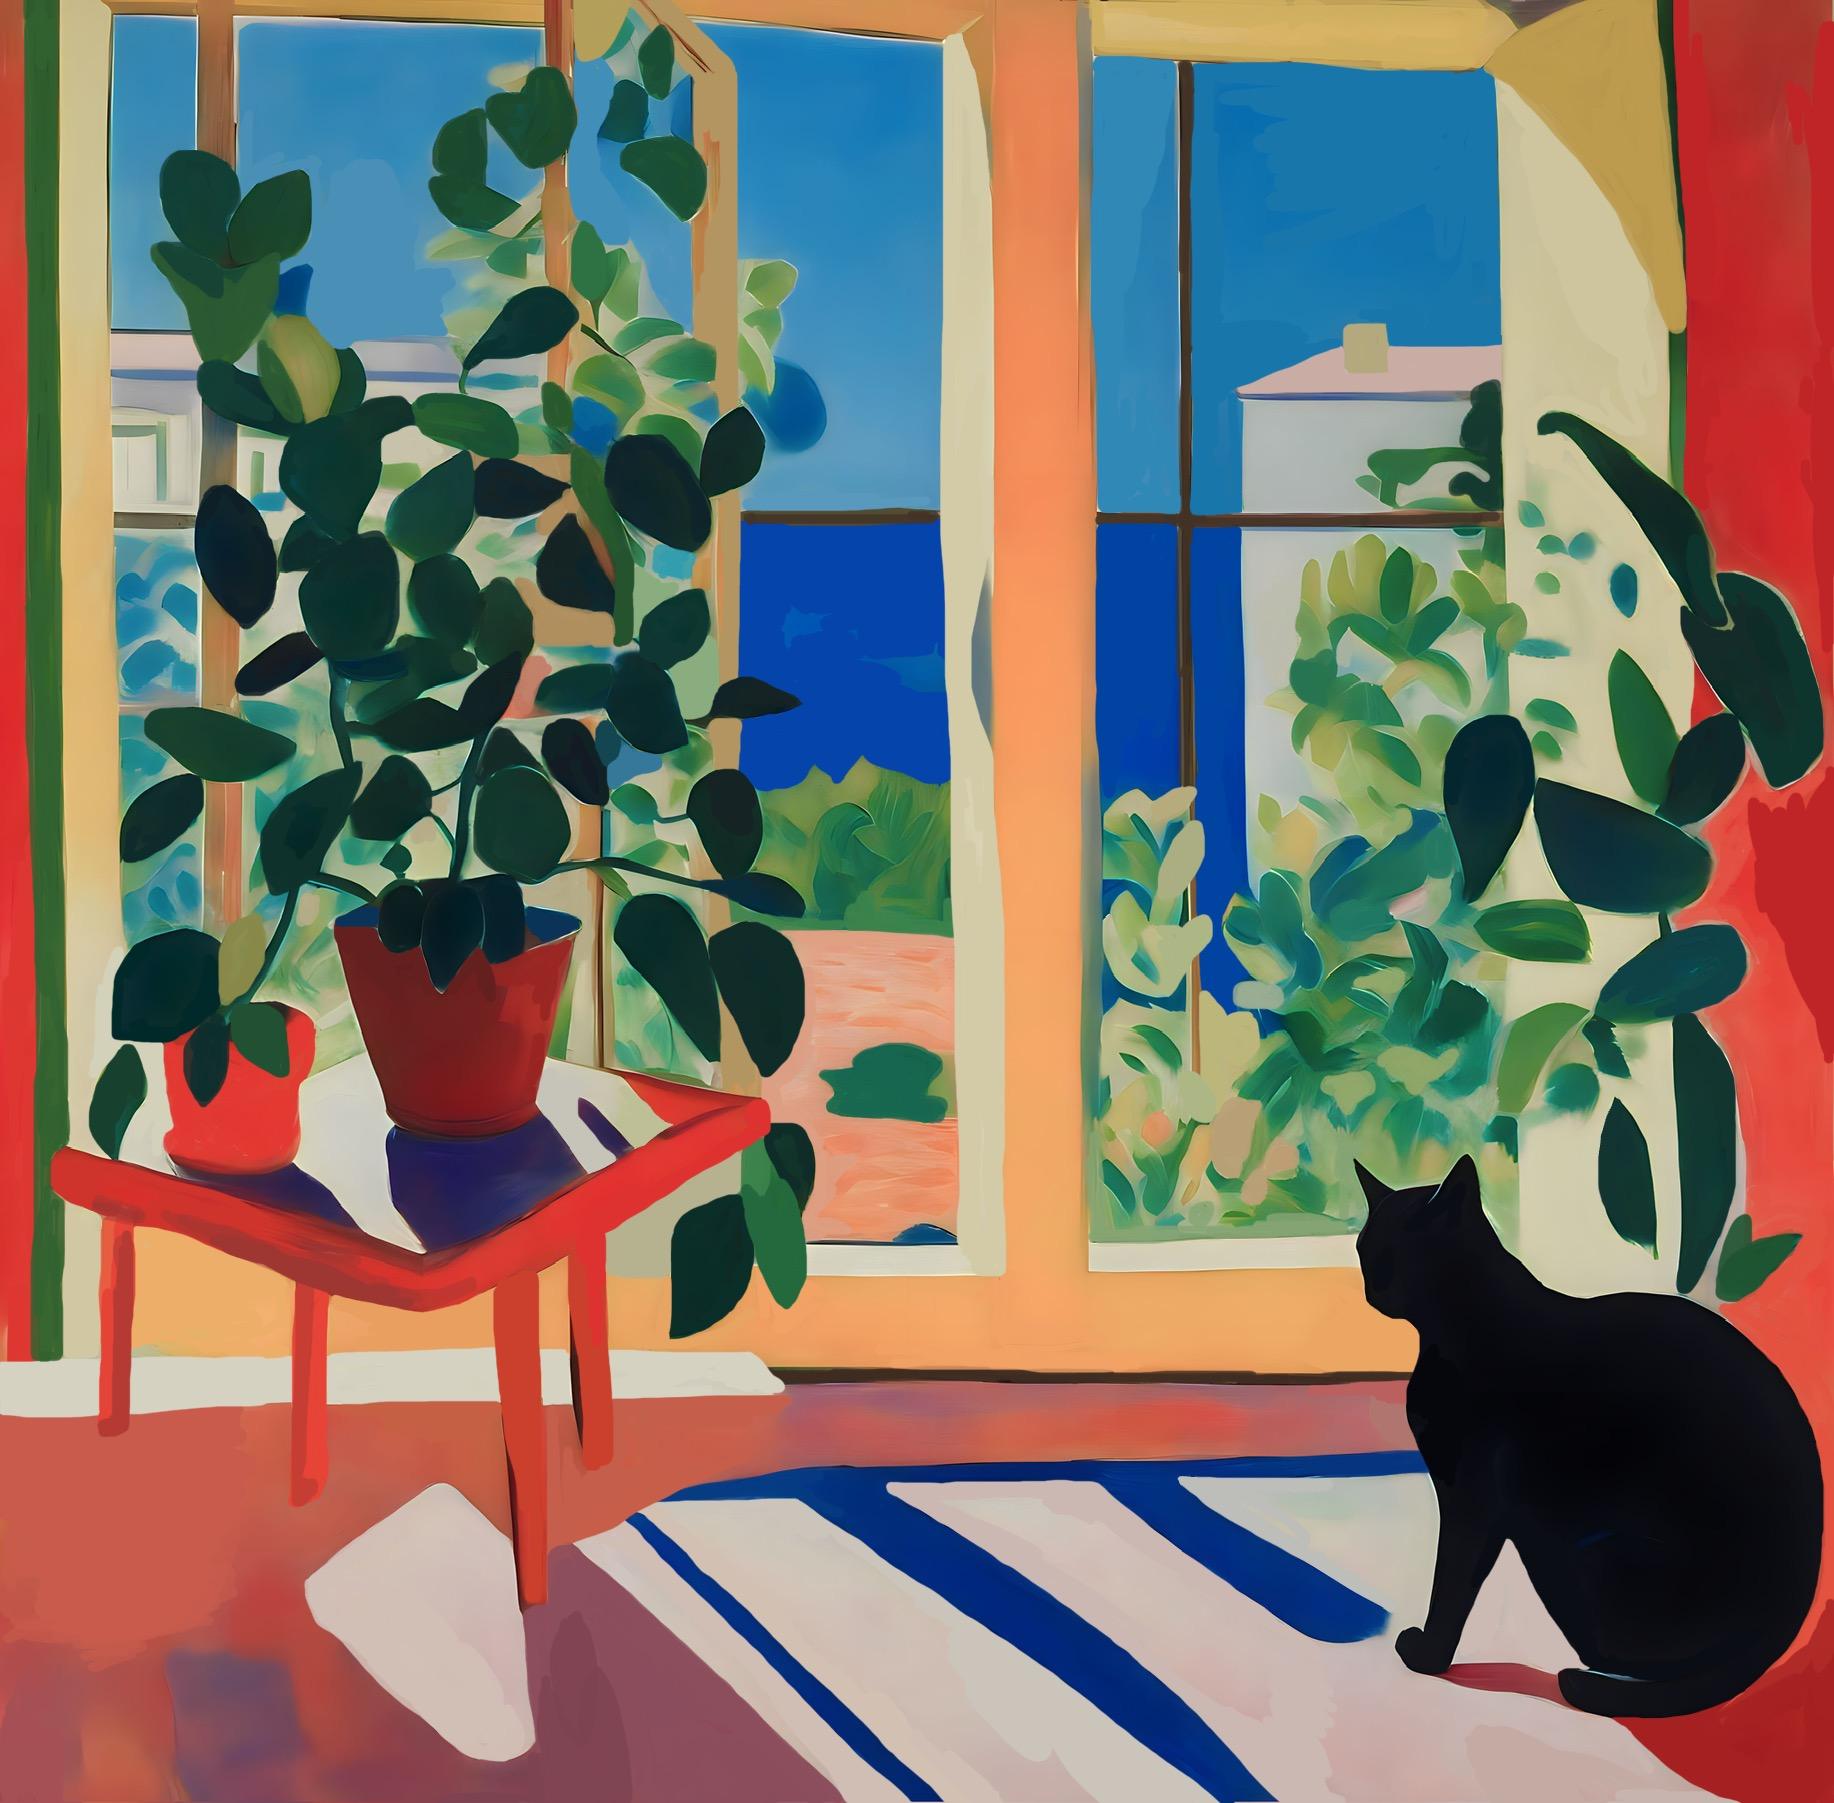 Black cat for good luck, 70x70cm, print on canvas - Print by Nina Tsoriti